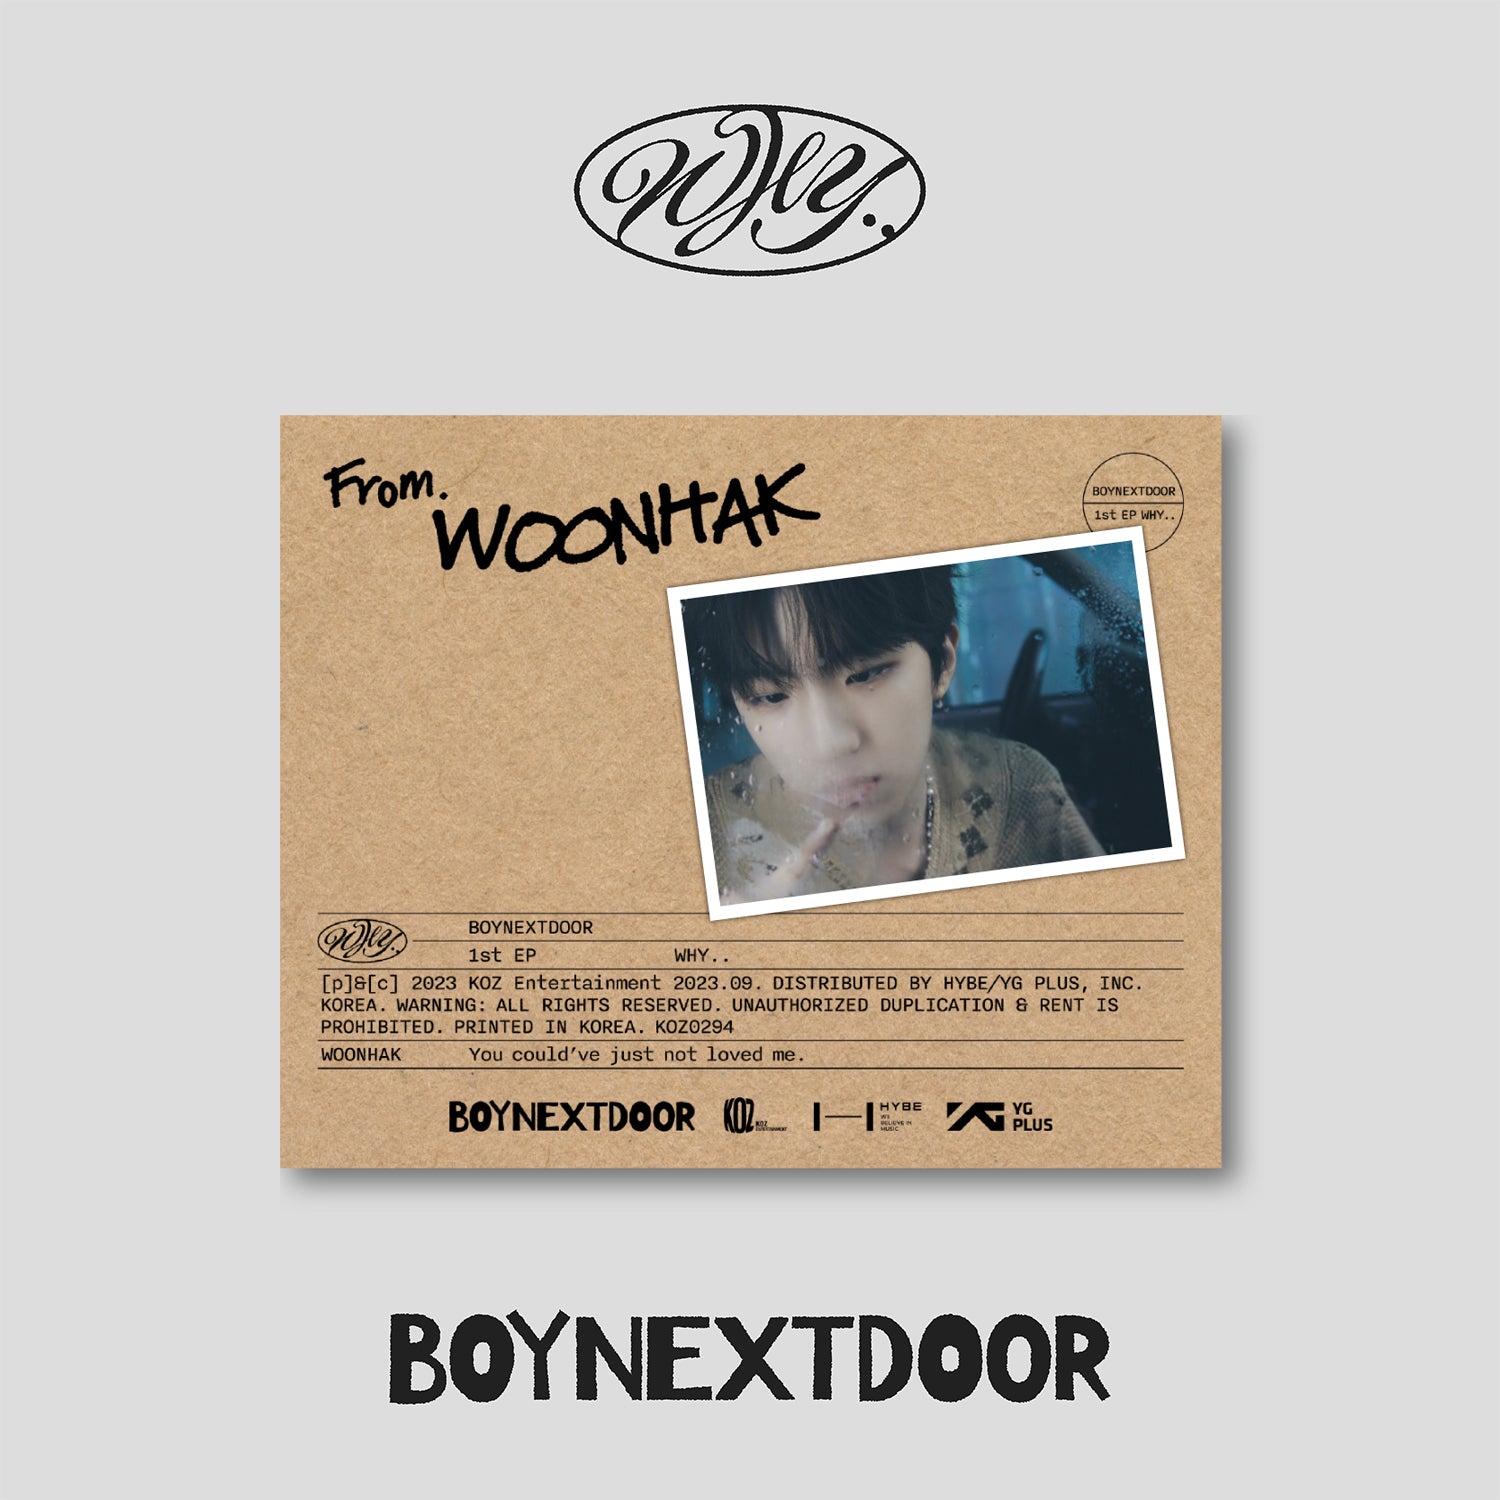 BOYNEXTDOOR 1ST EP ALBUM 'WHY..' (LETTER) WOONHAK VERSION COVER